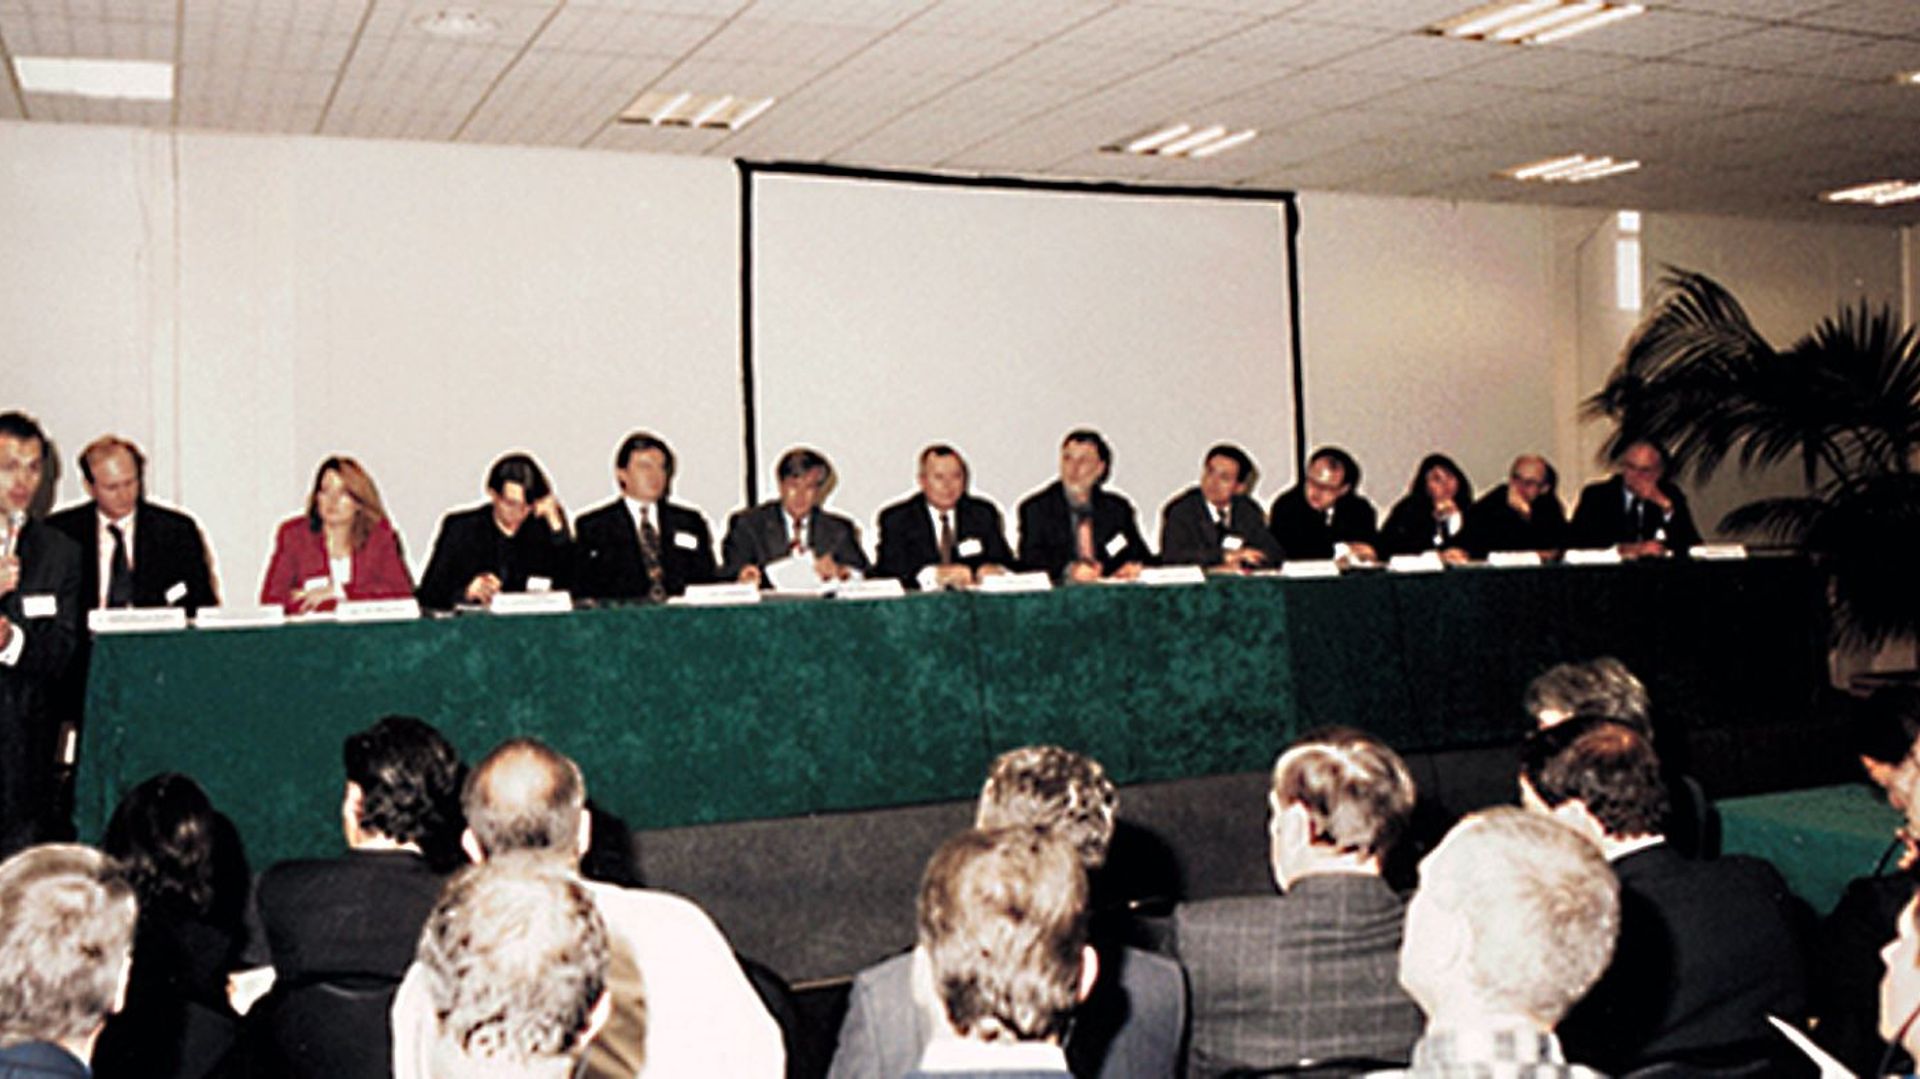 Introducing the concept of EurepGAP certification to 330 delegates in Paris, 1999